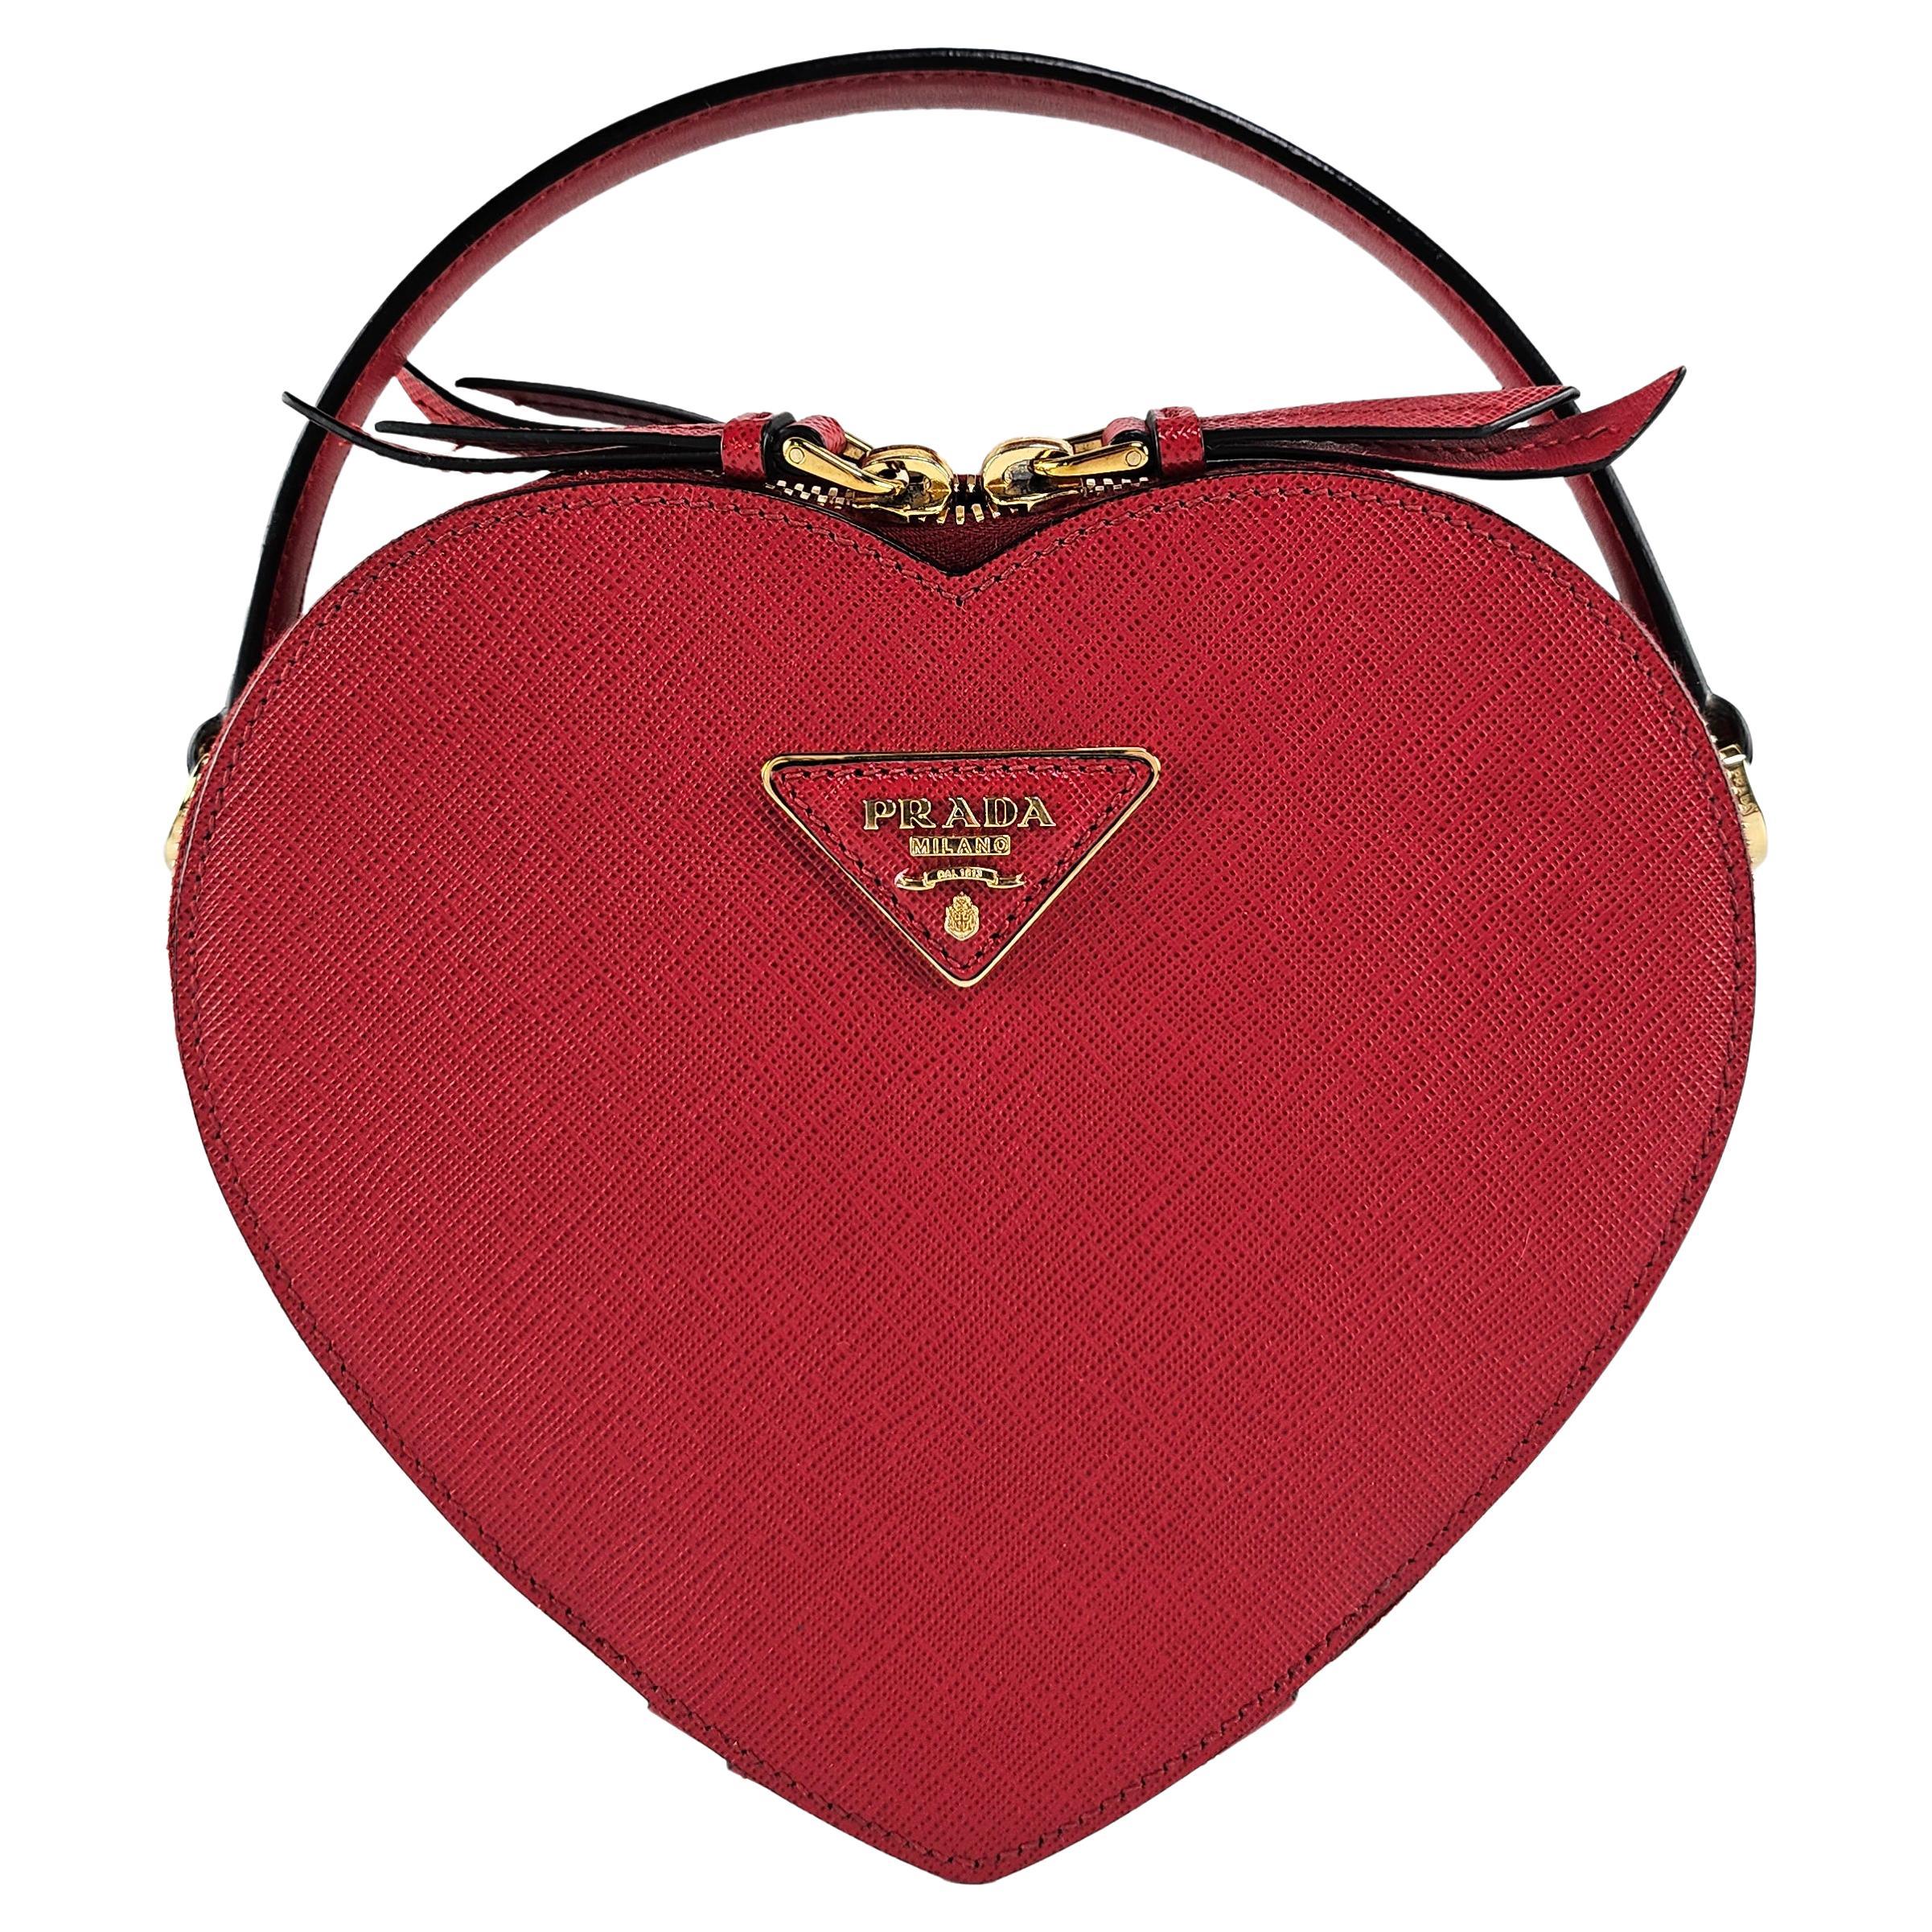 Prada Odette Heart Red Saffiano Leather Satchel